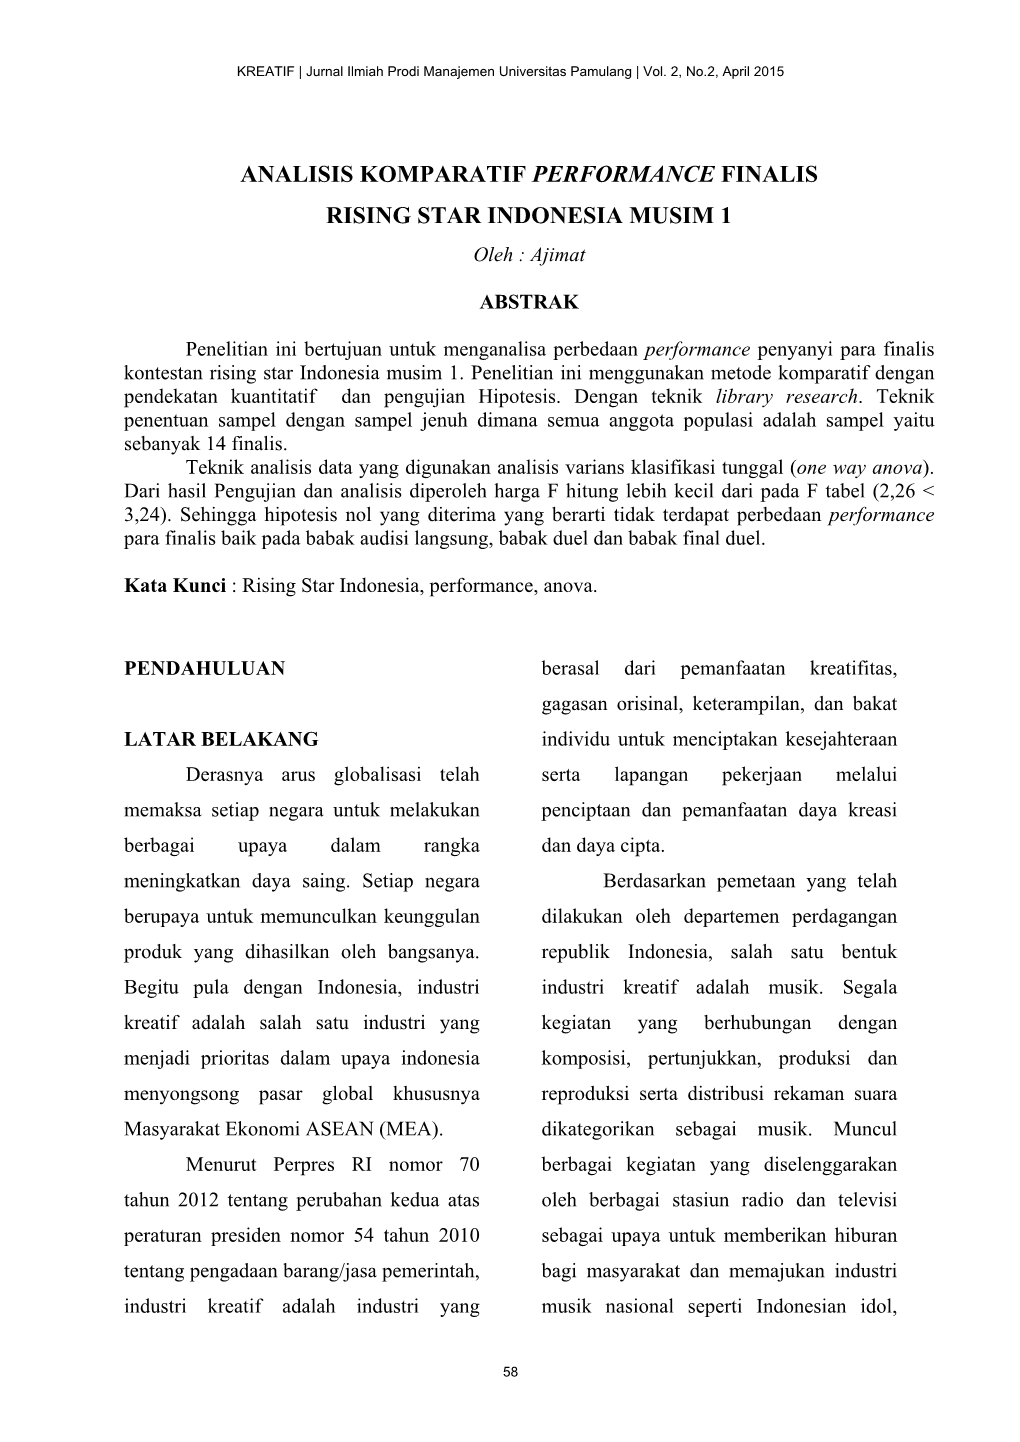 ANALISIS KOMPARATIF PERFORMANCE FINALIS RISING STAR INDONESIA MUSIM 1 Oleh : Ajimat